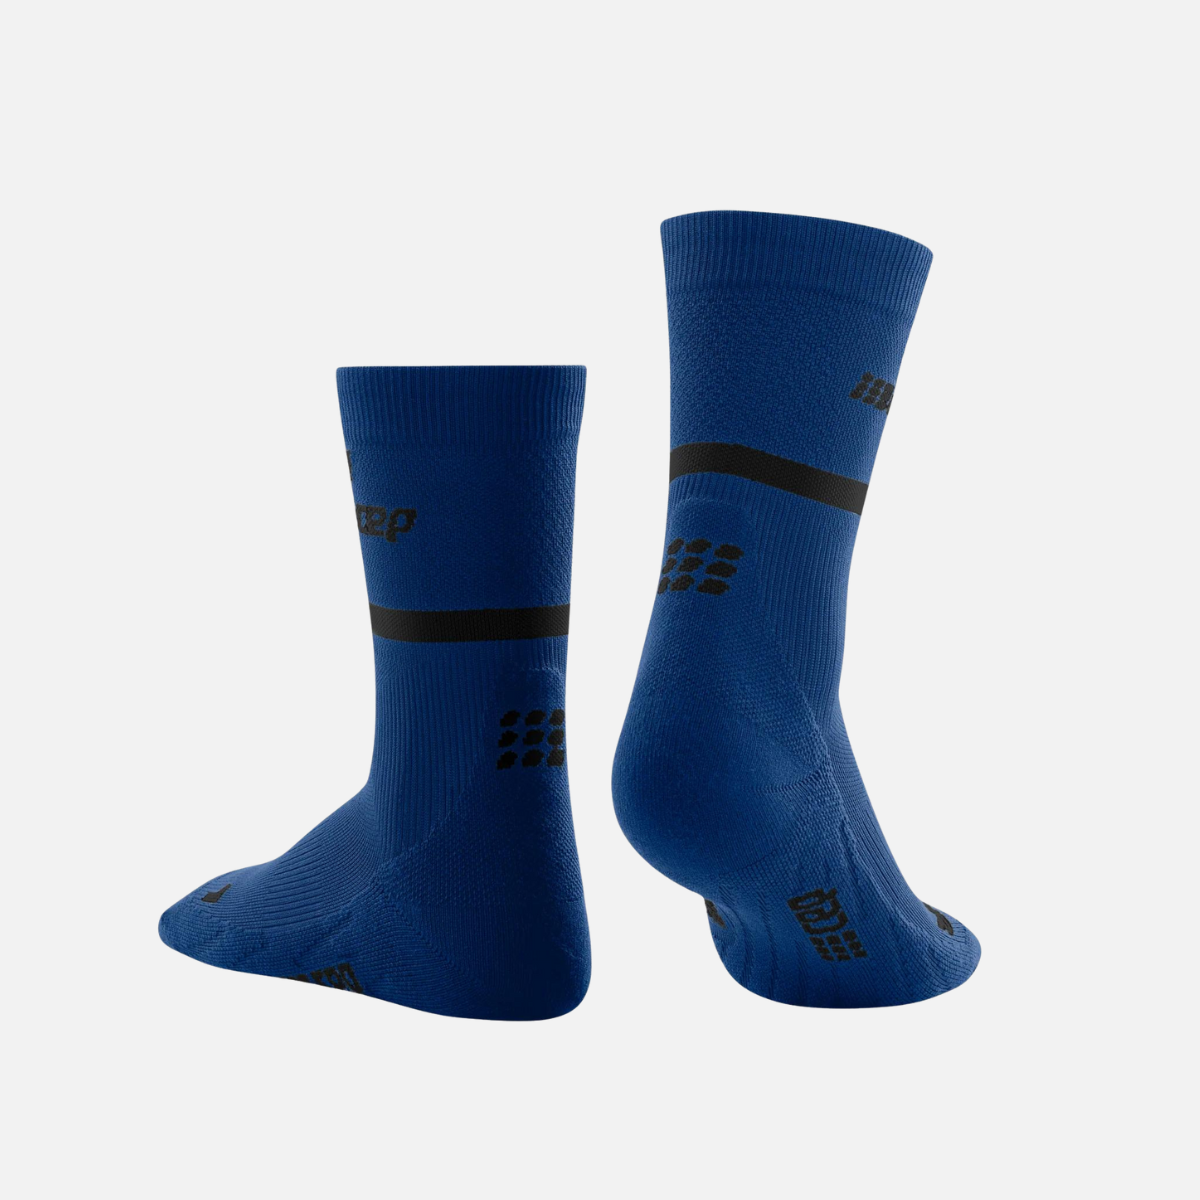 Cep The Run Compression 4.0 Mid Cut Men's Socks -Blue